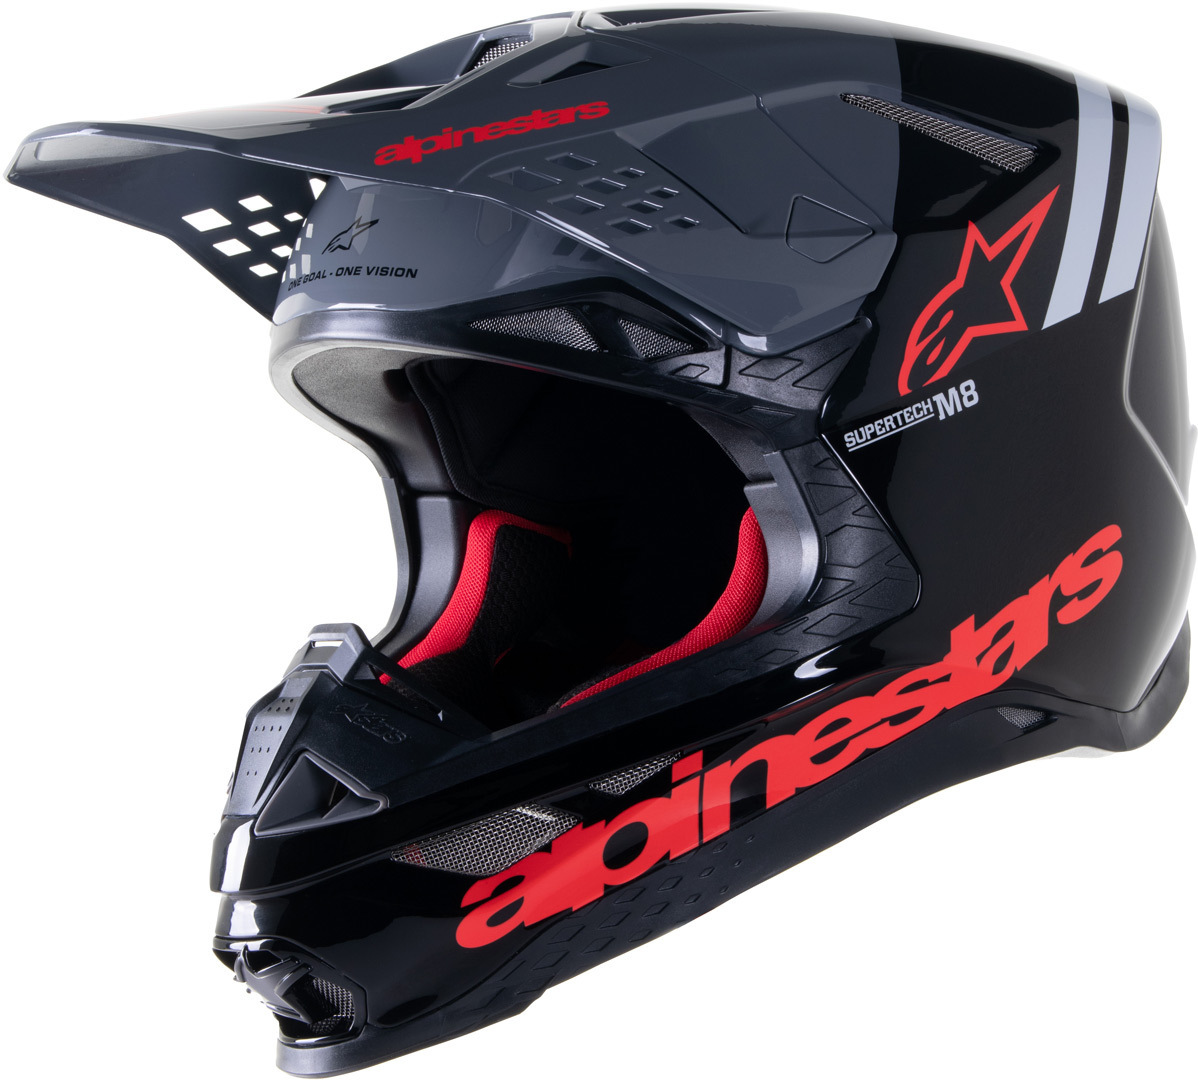 Alpinestars Supertech M8 Radium 2 Motocross Helmet, black-red, Size XL, black-red, Size XL